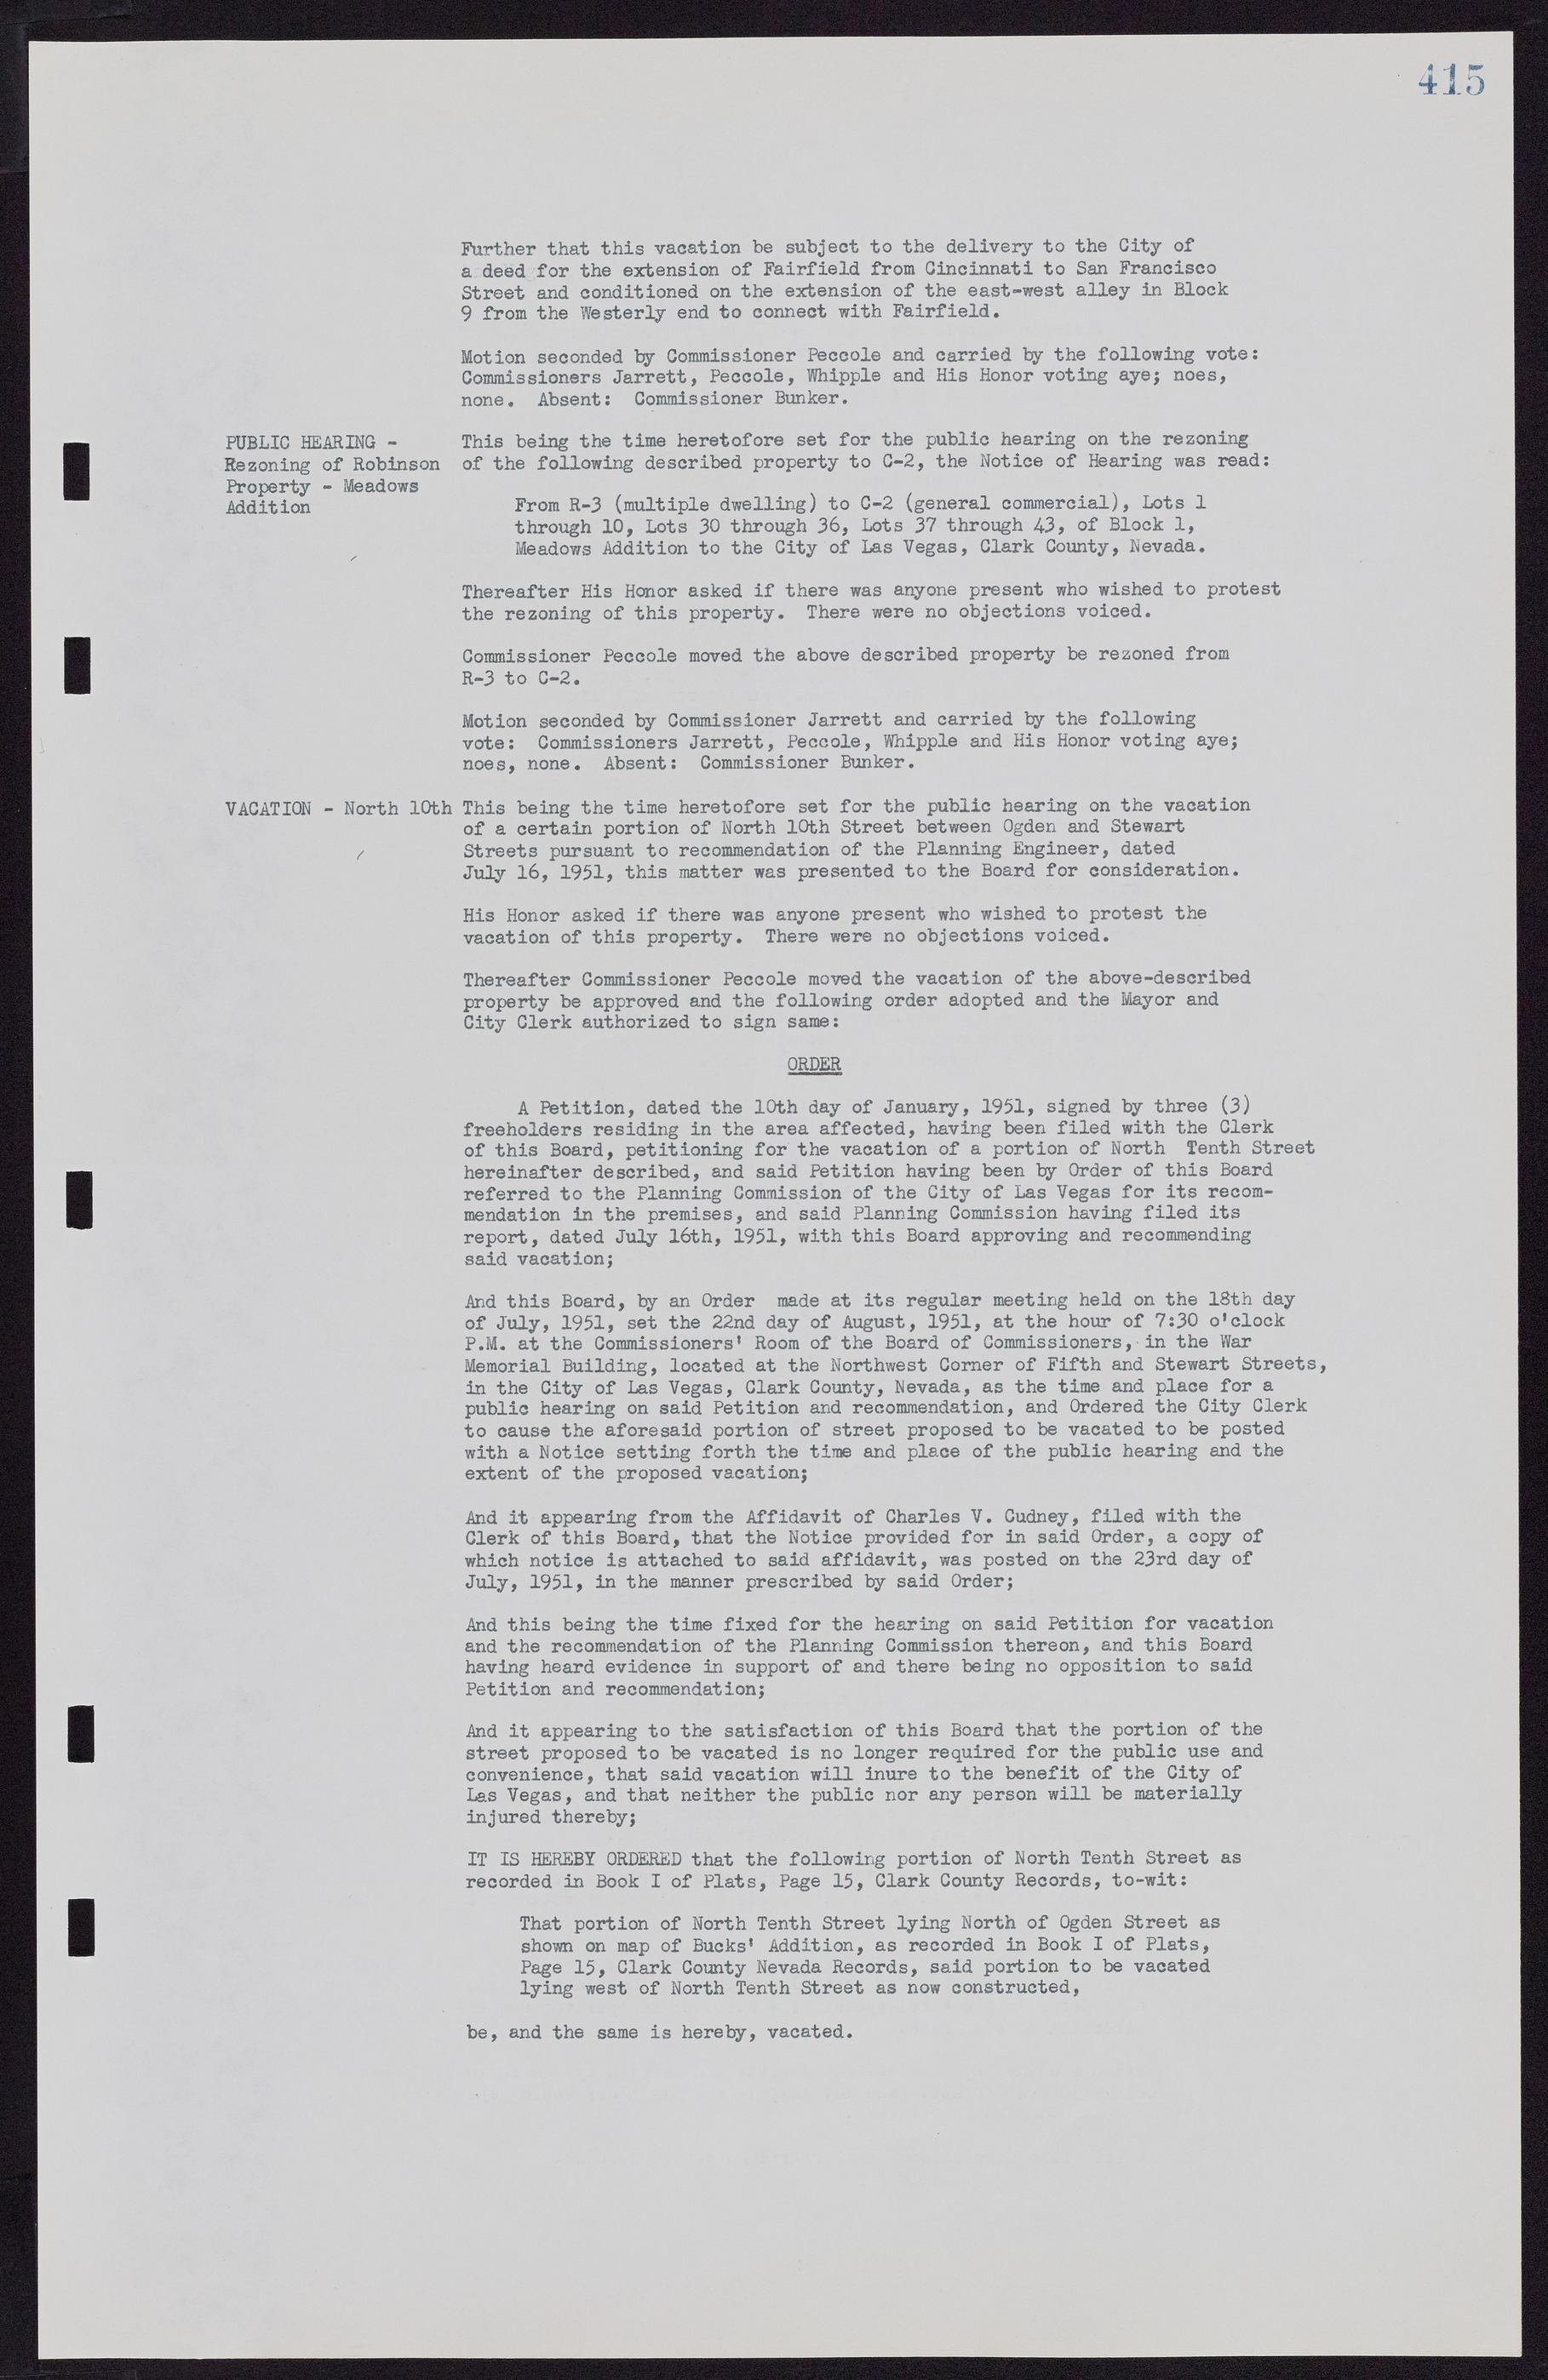 Las Vegas City Commission Minutes, November 7, 1949 to May 21, 1952, lvc000007-431